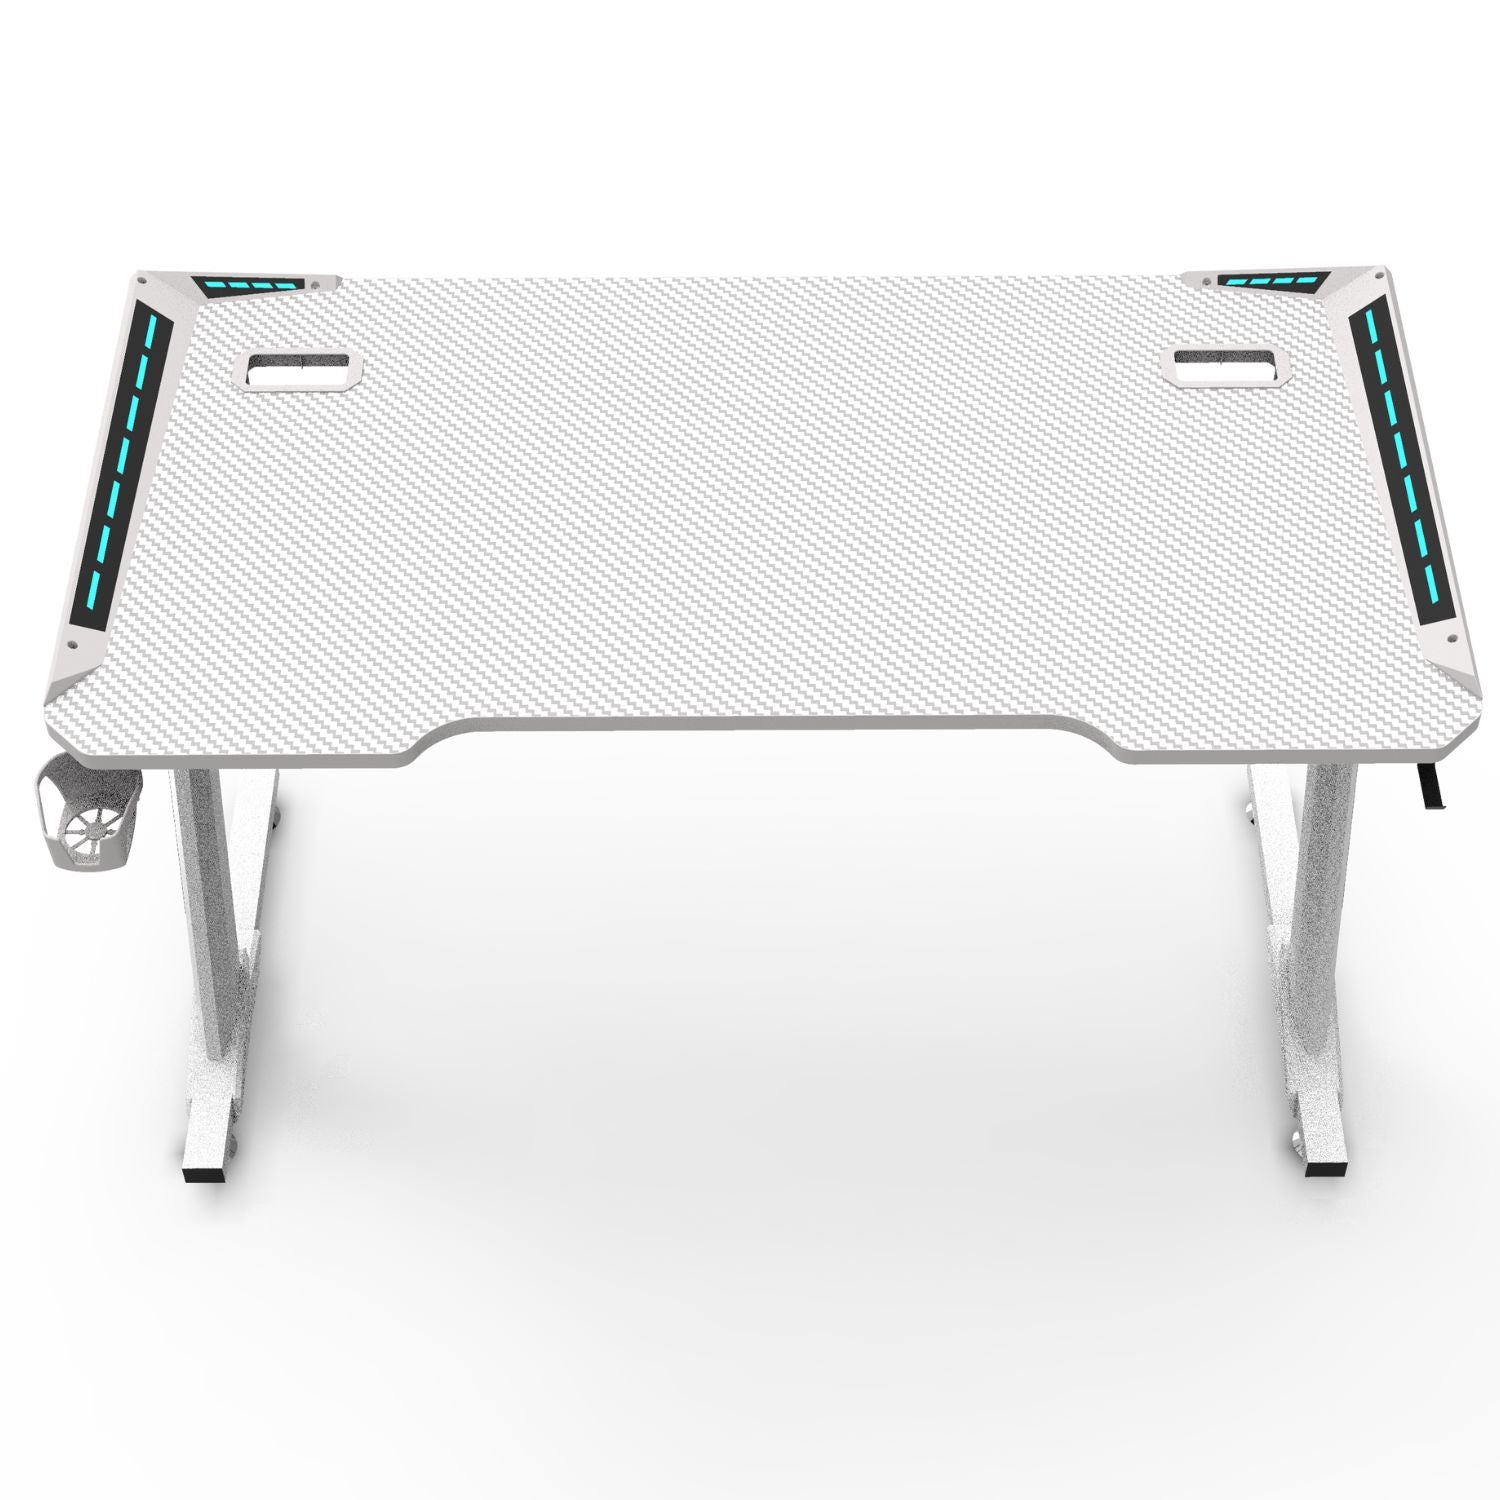 EKKIO RGB Gaming Desk Z Shape White 140cm